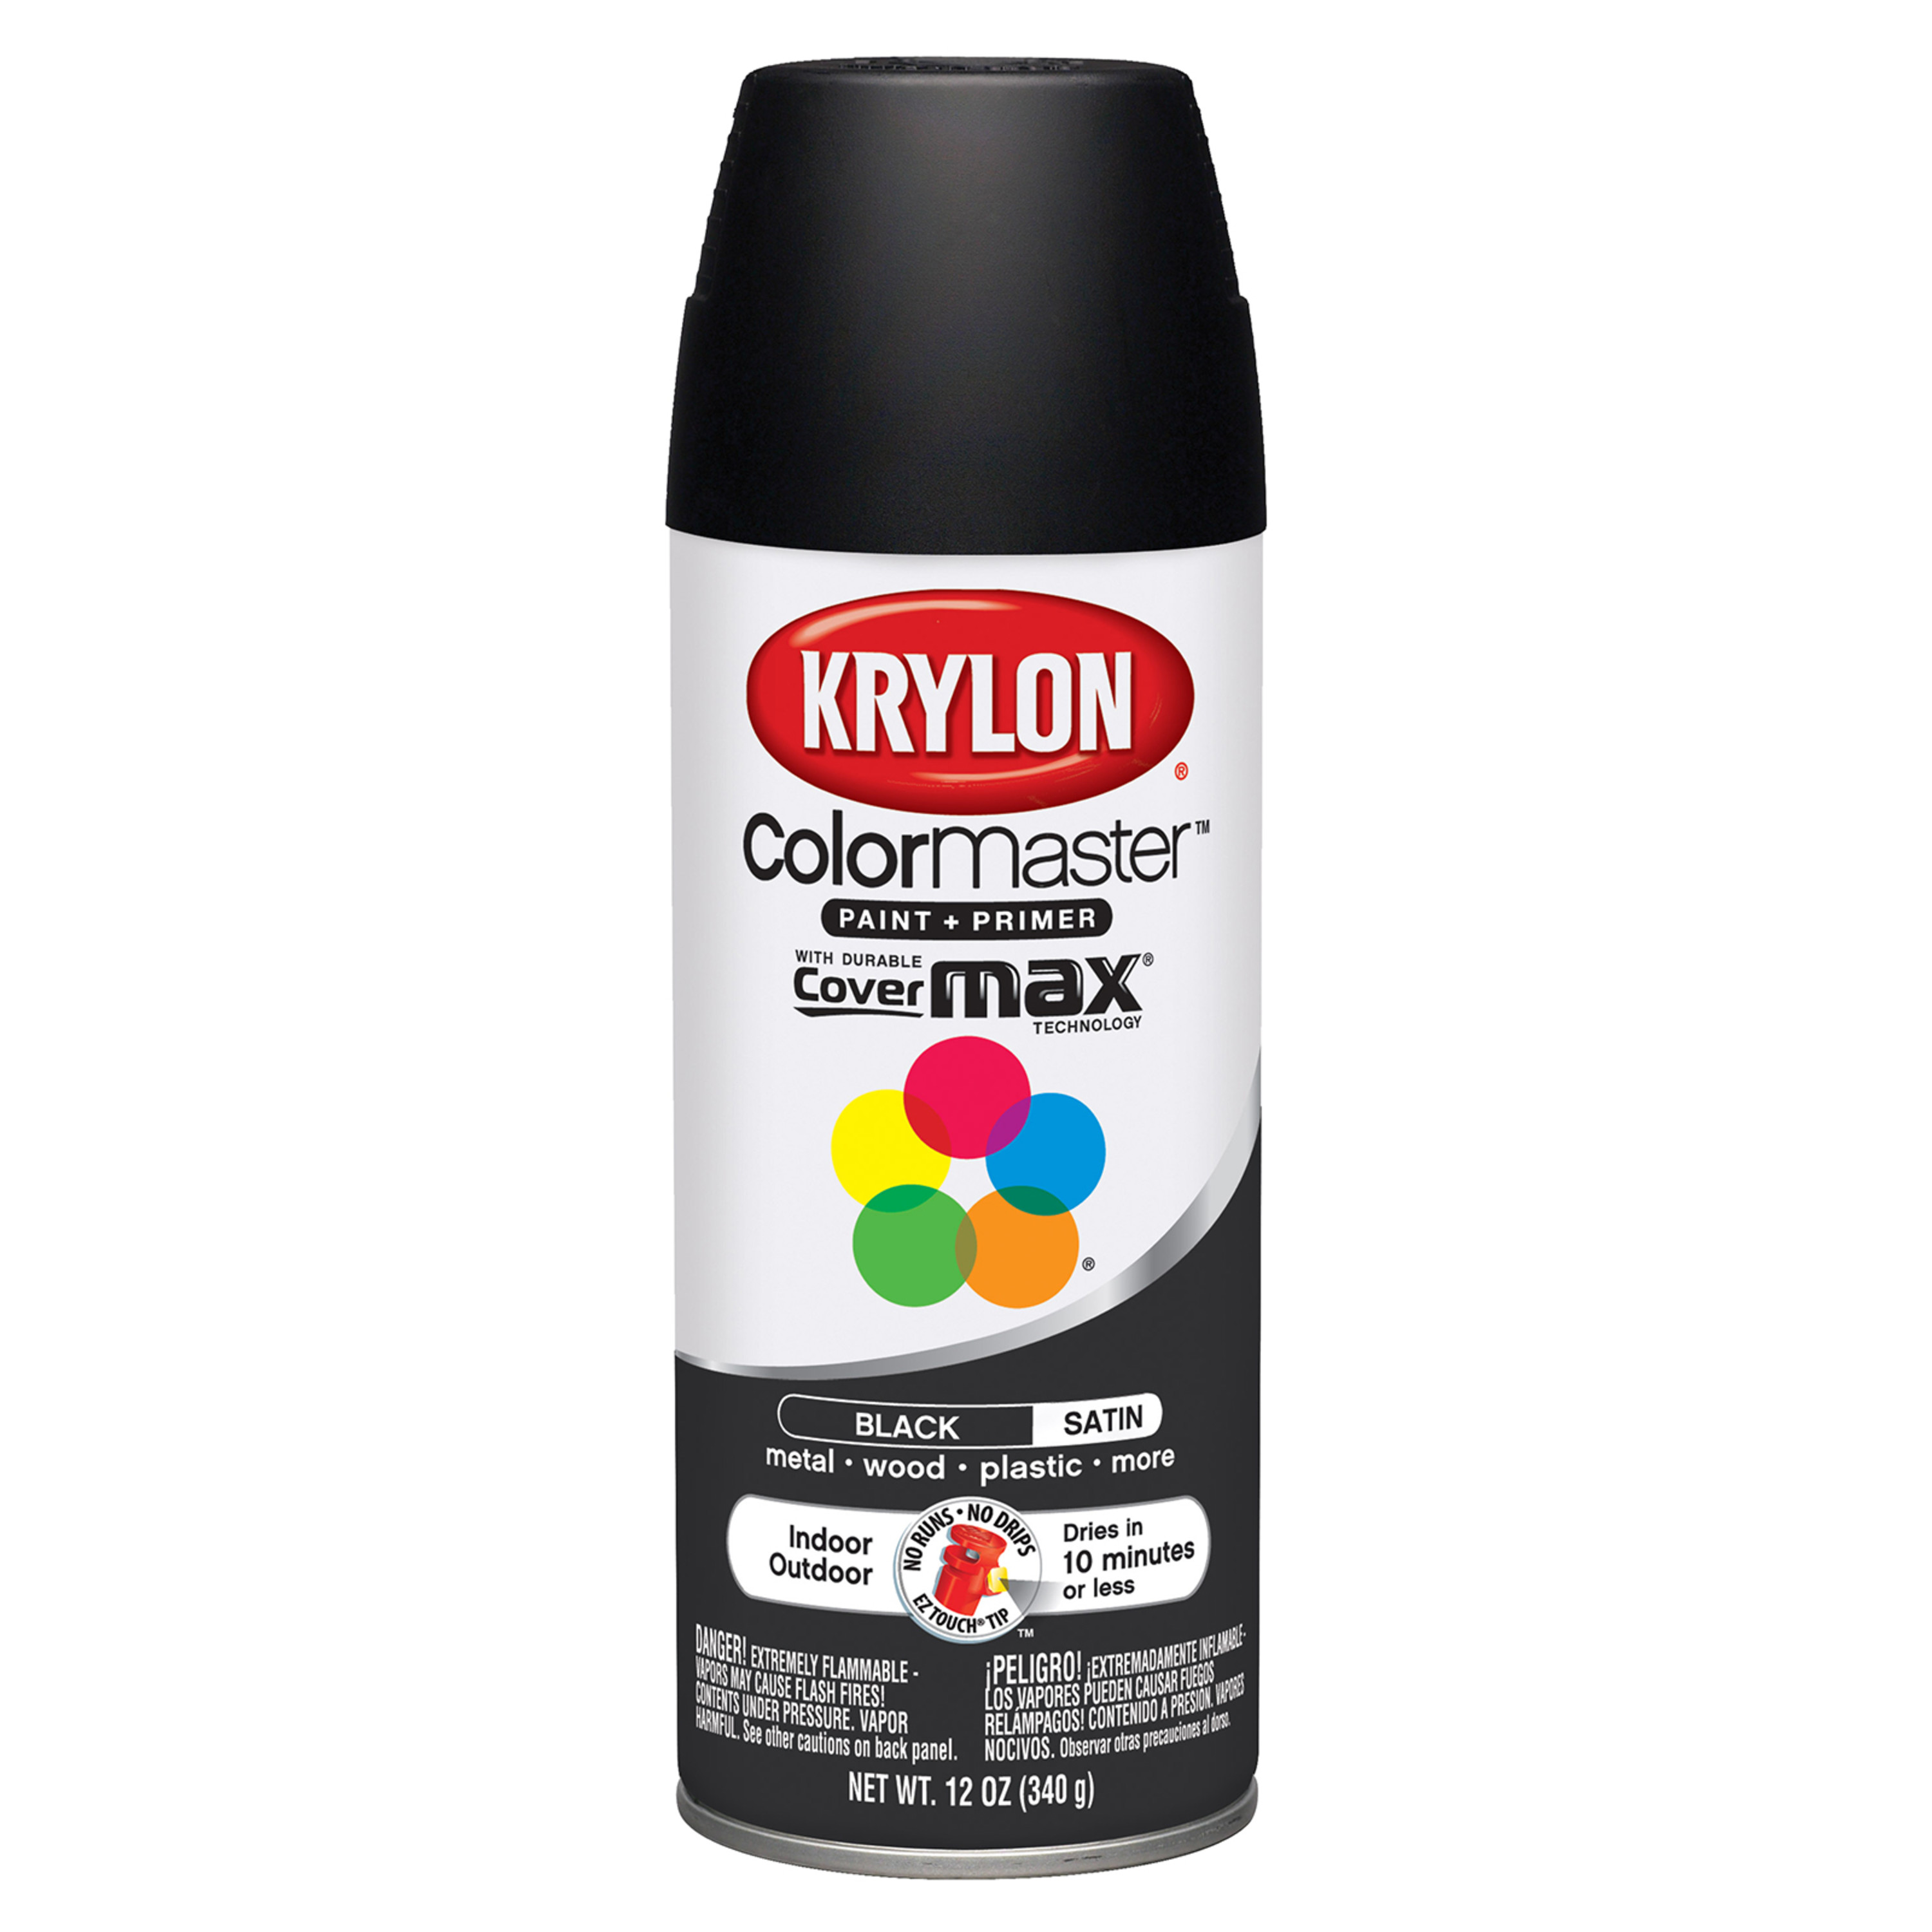 Krylon ColorMaster Paint + Primer Spray Paint, Satin, Black, 12 oz. - image 1 of 2